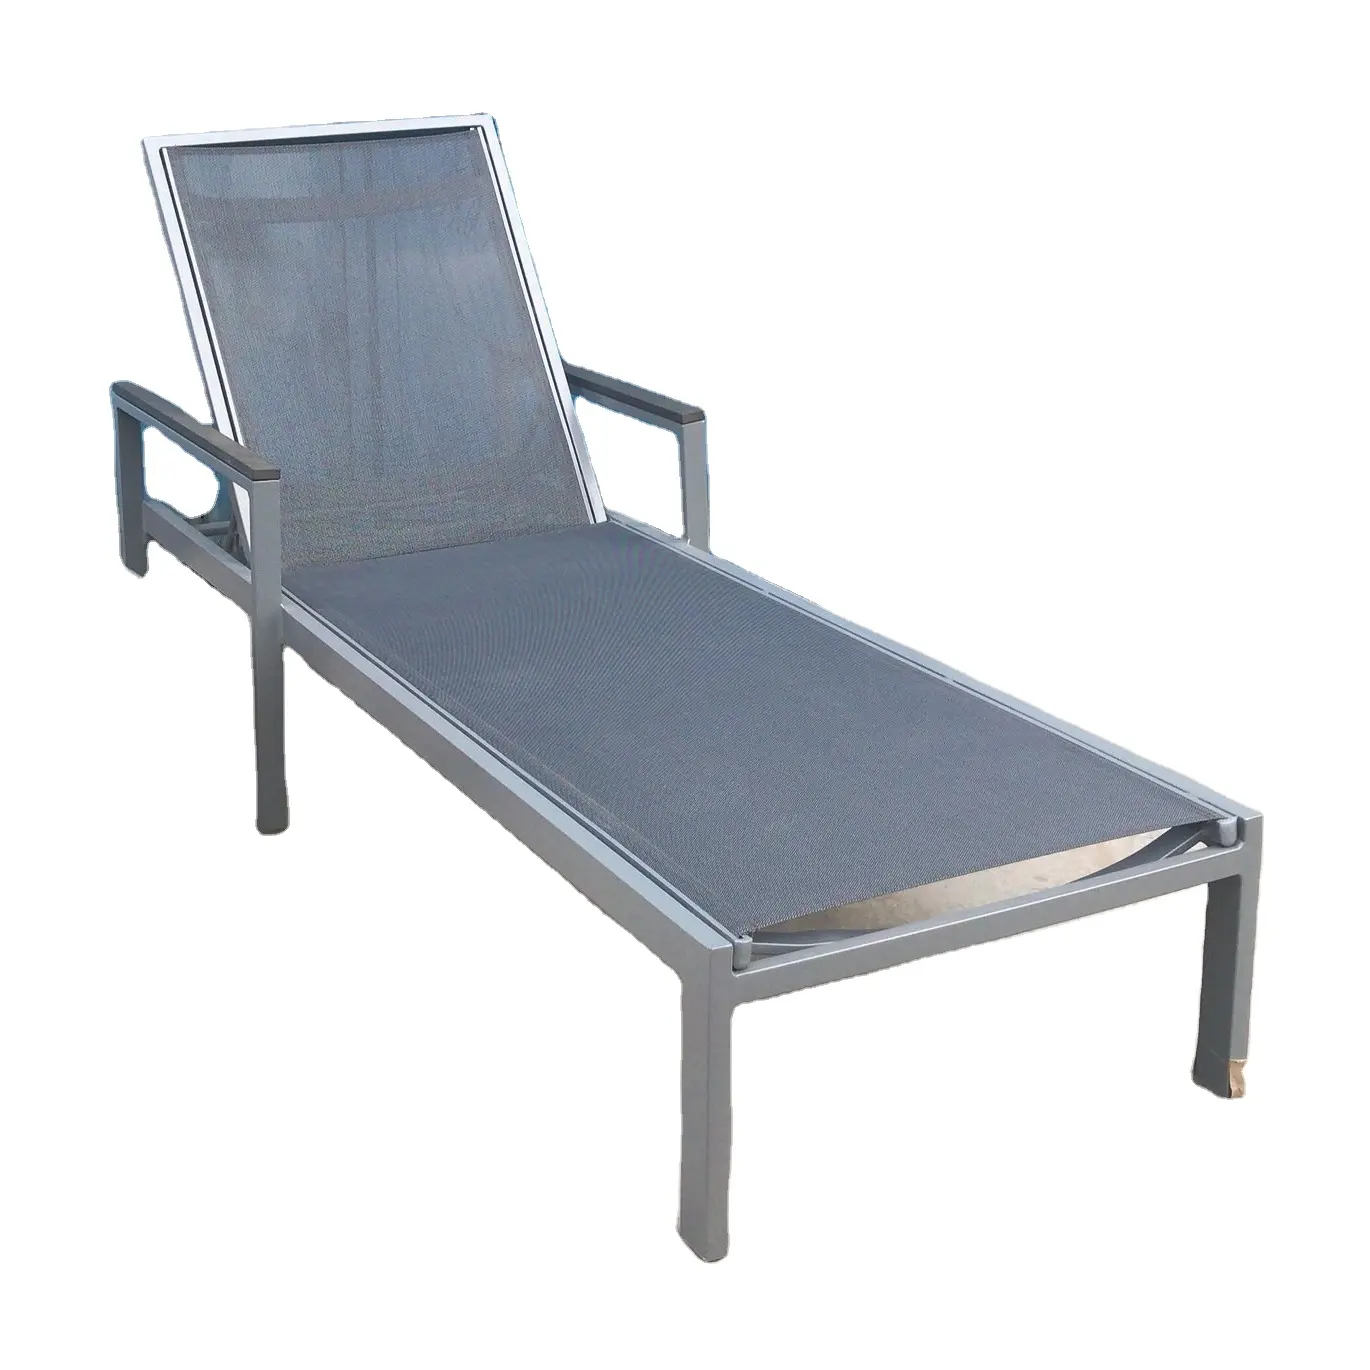 Factory Patio furniture aluminum sun lounger garden furniture aluminum sunbed outdoor sling chair